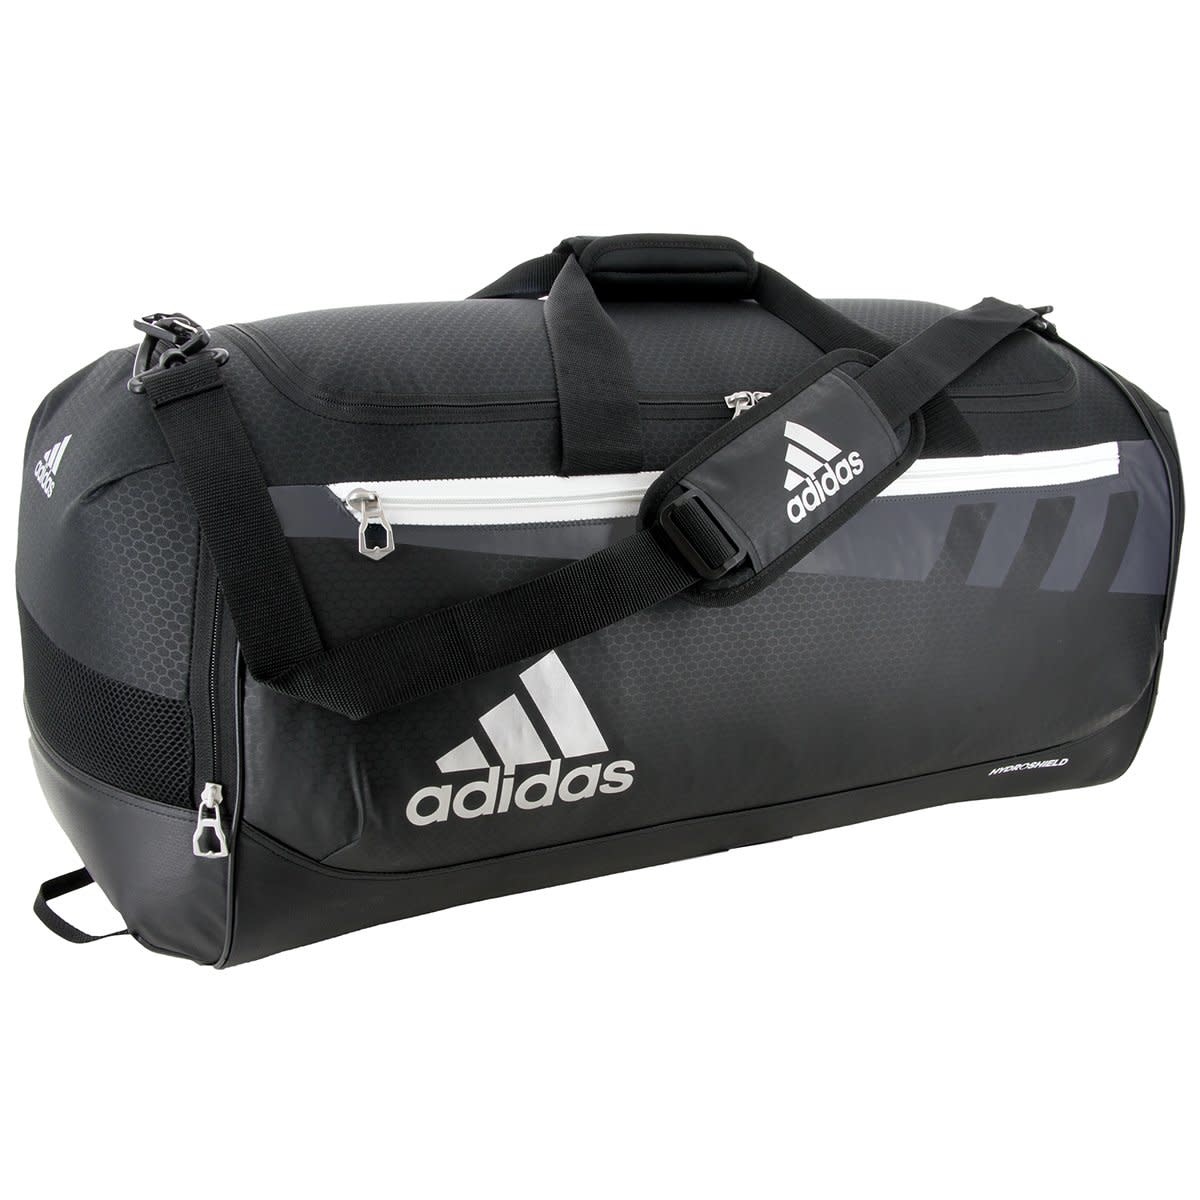 adidas Team Issue Duffel Bag - Small Soccerium